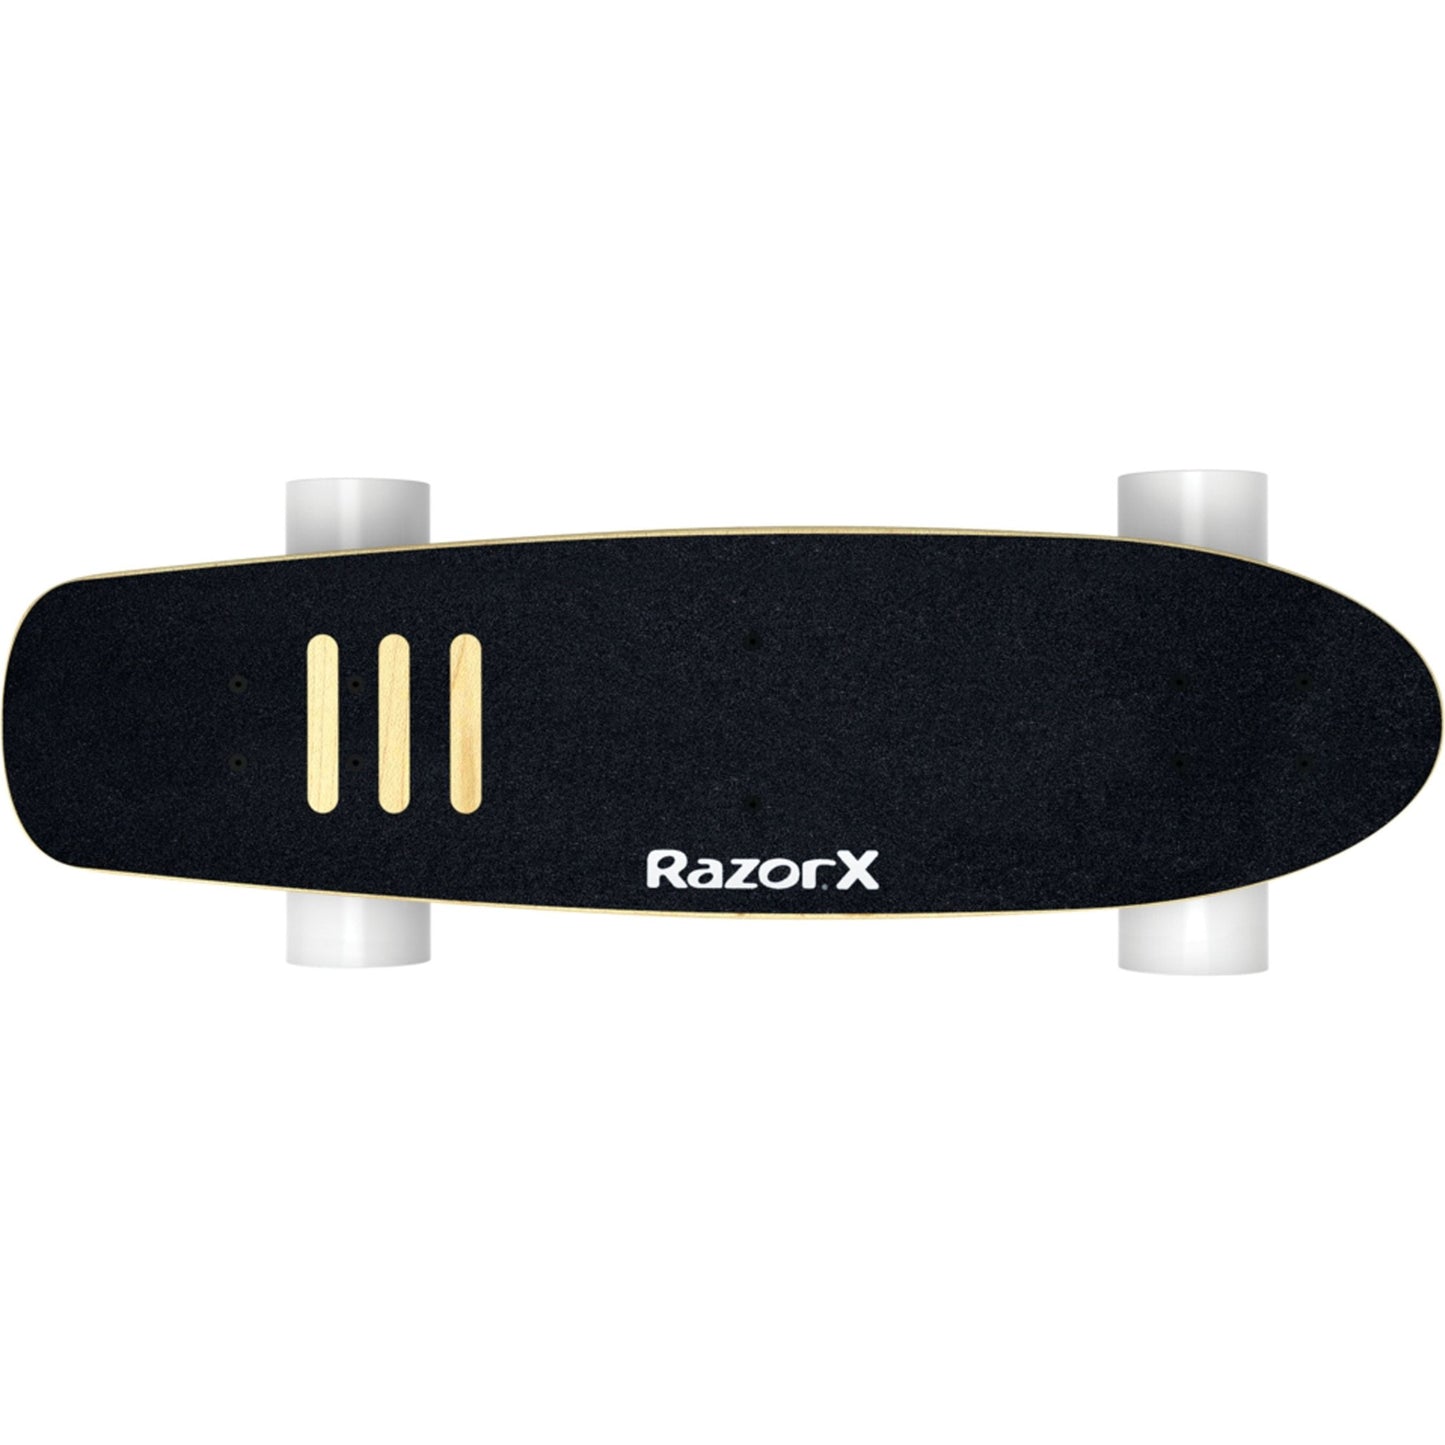 Razor X-Cruiser Electric Skateboard 22 Volt